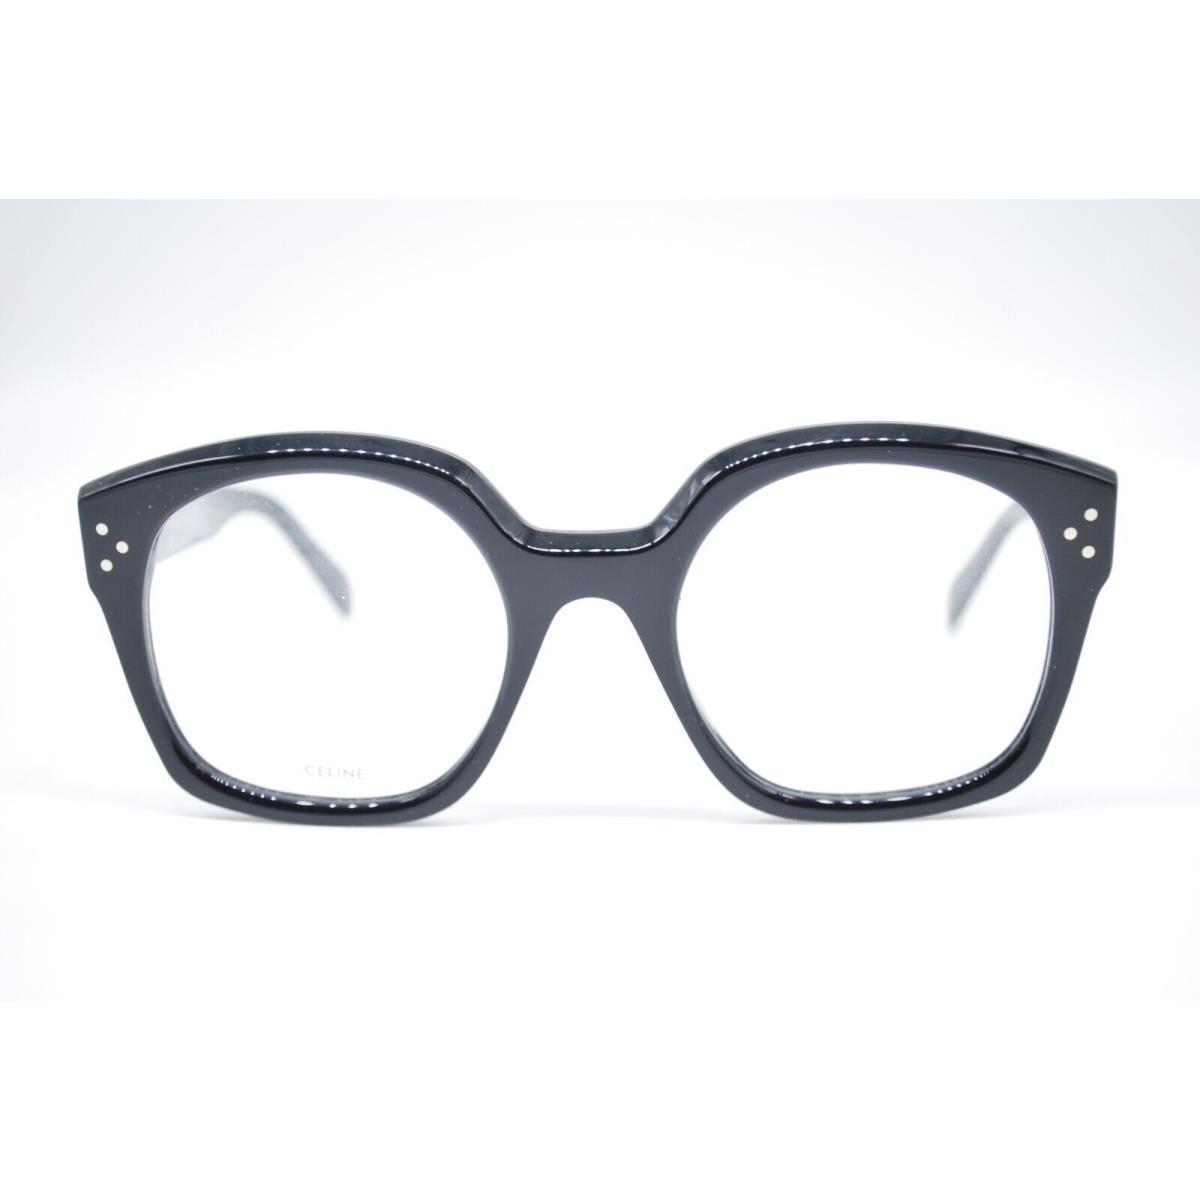 Celine eyeglasses  - Black Frame 1